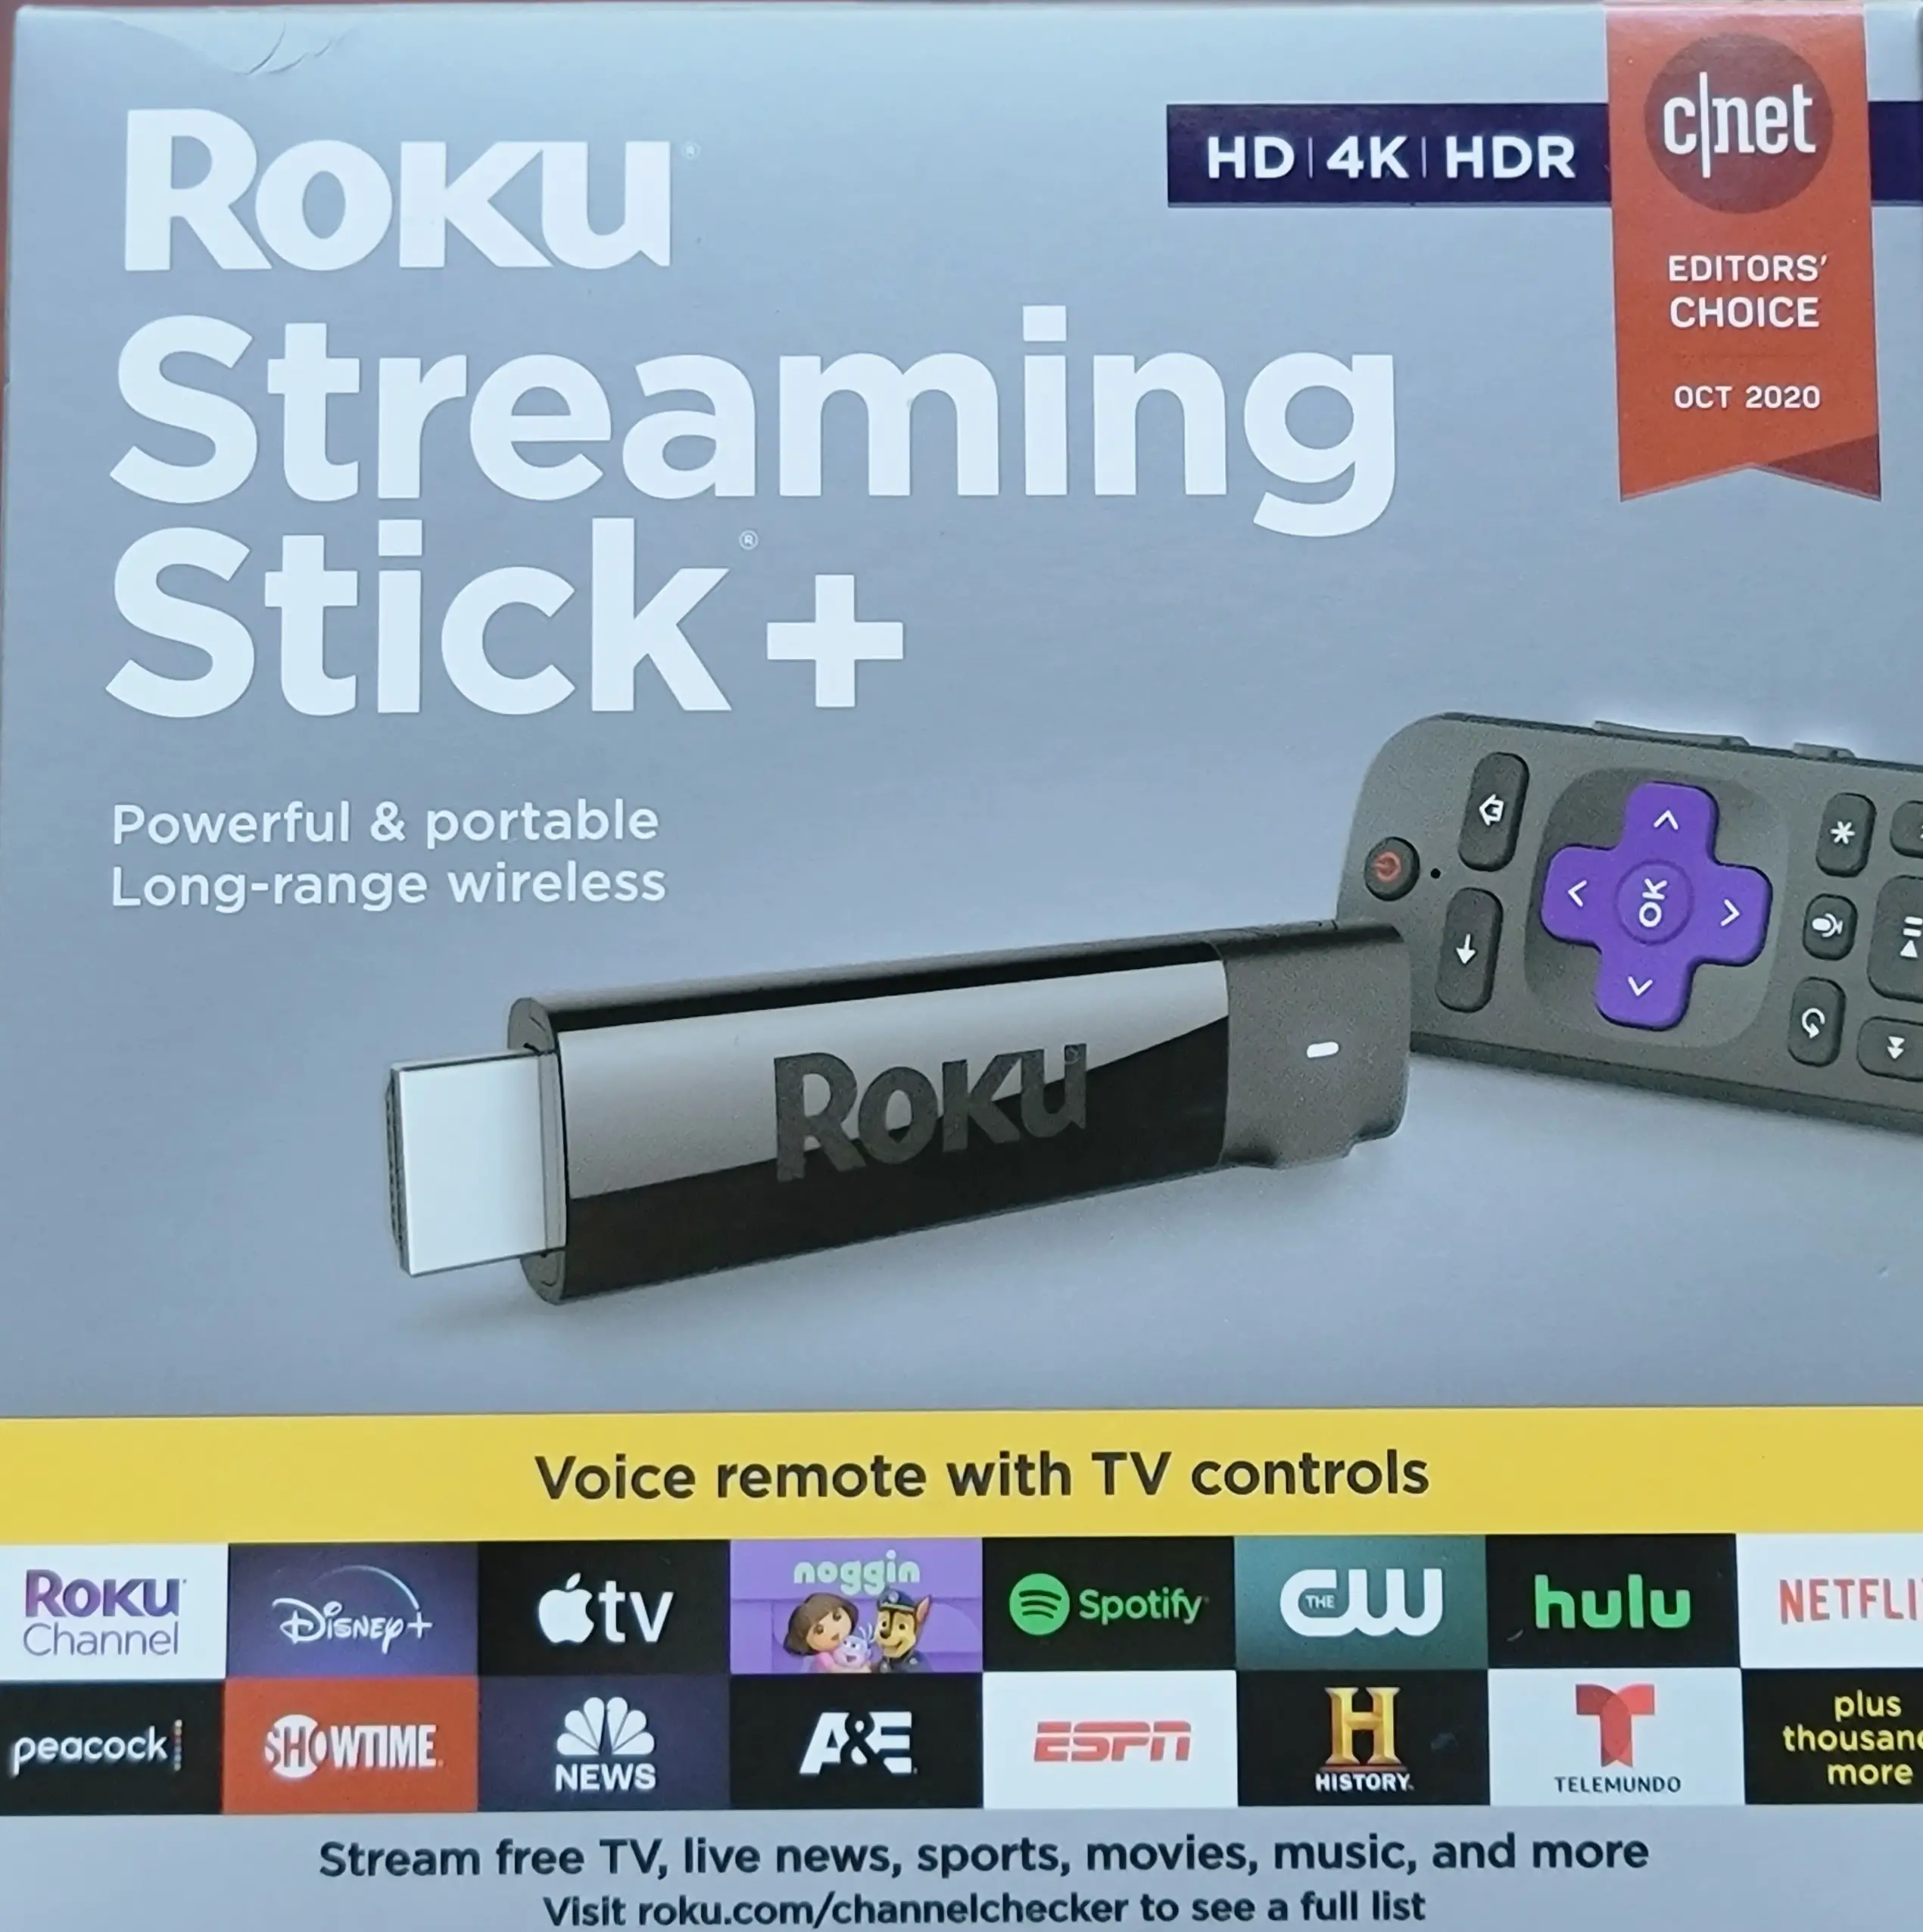 Does Roku Stick Work on Any TV